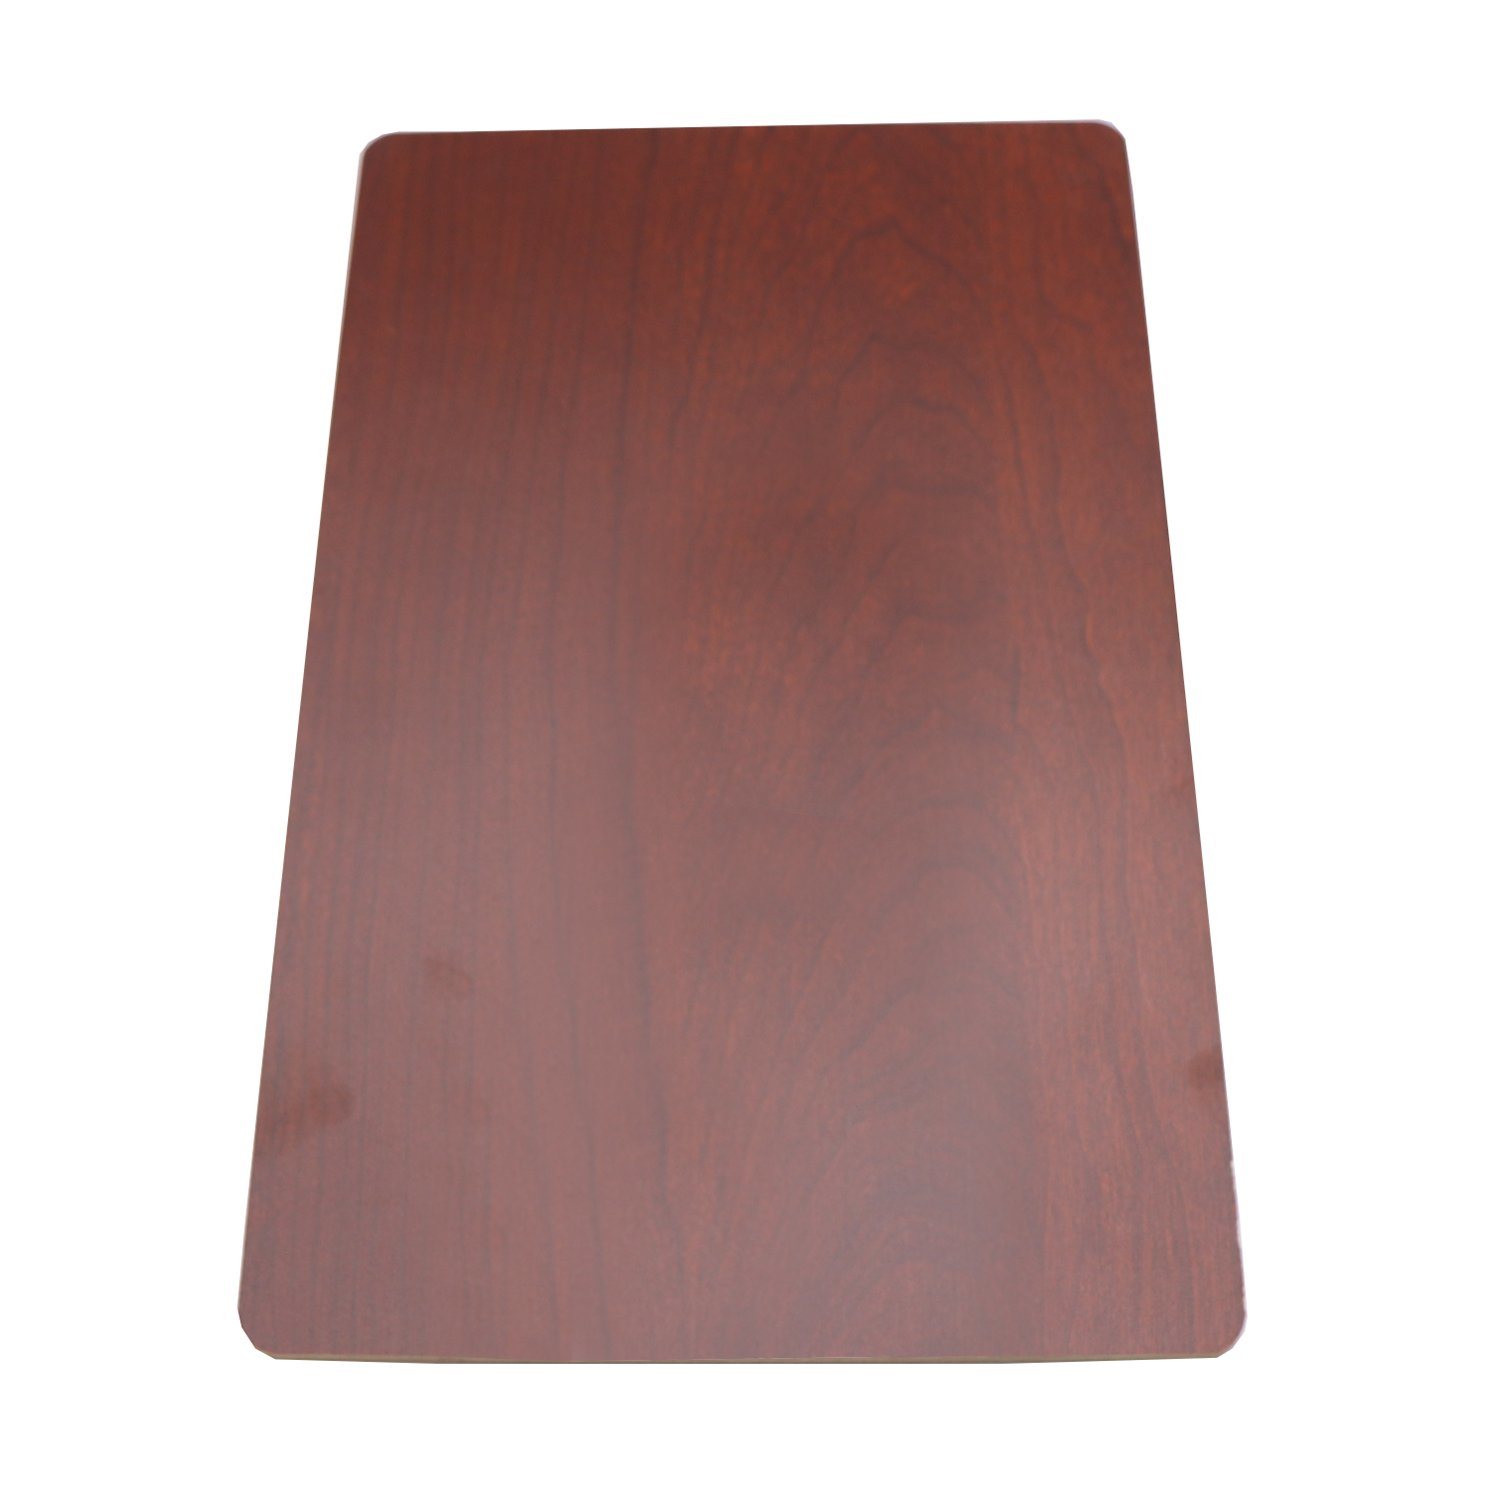 China Factory Supply Melamine Coated Plywood E0 E1 Grade Plywood Board for Furniture